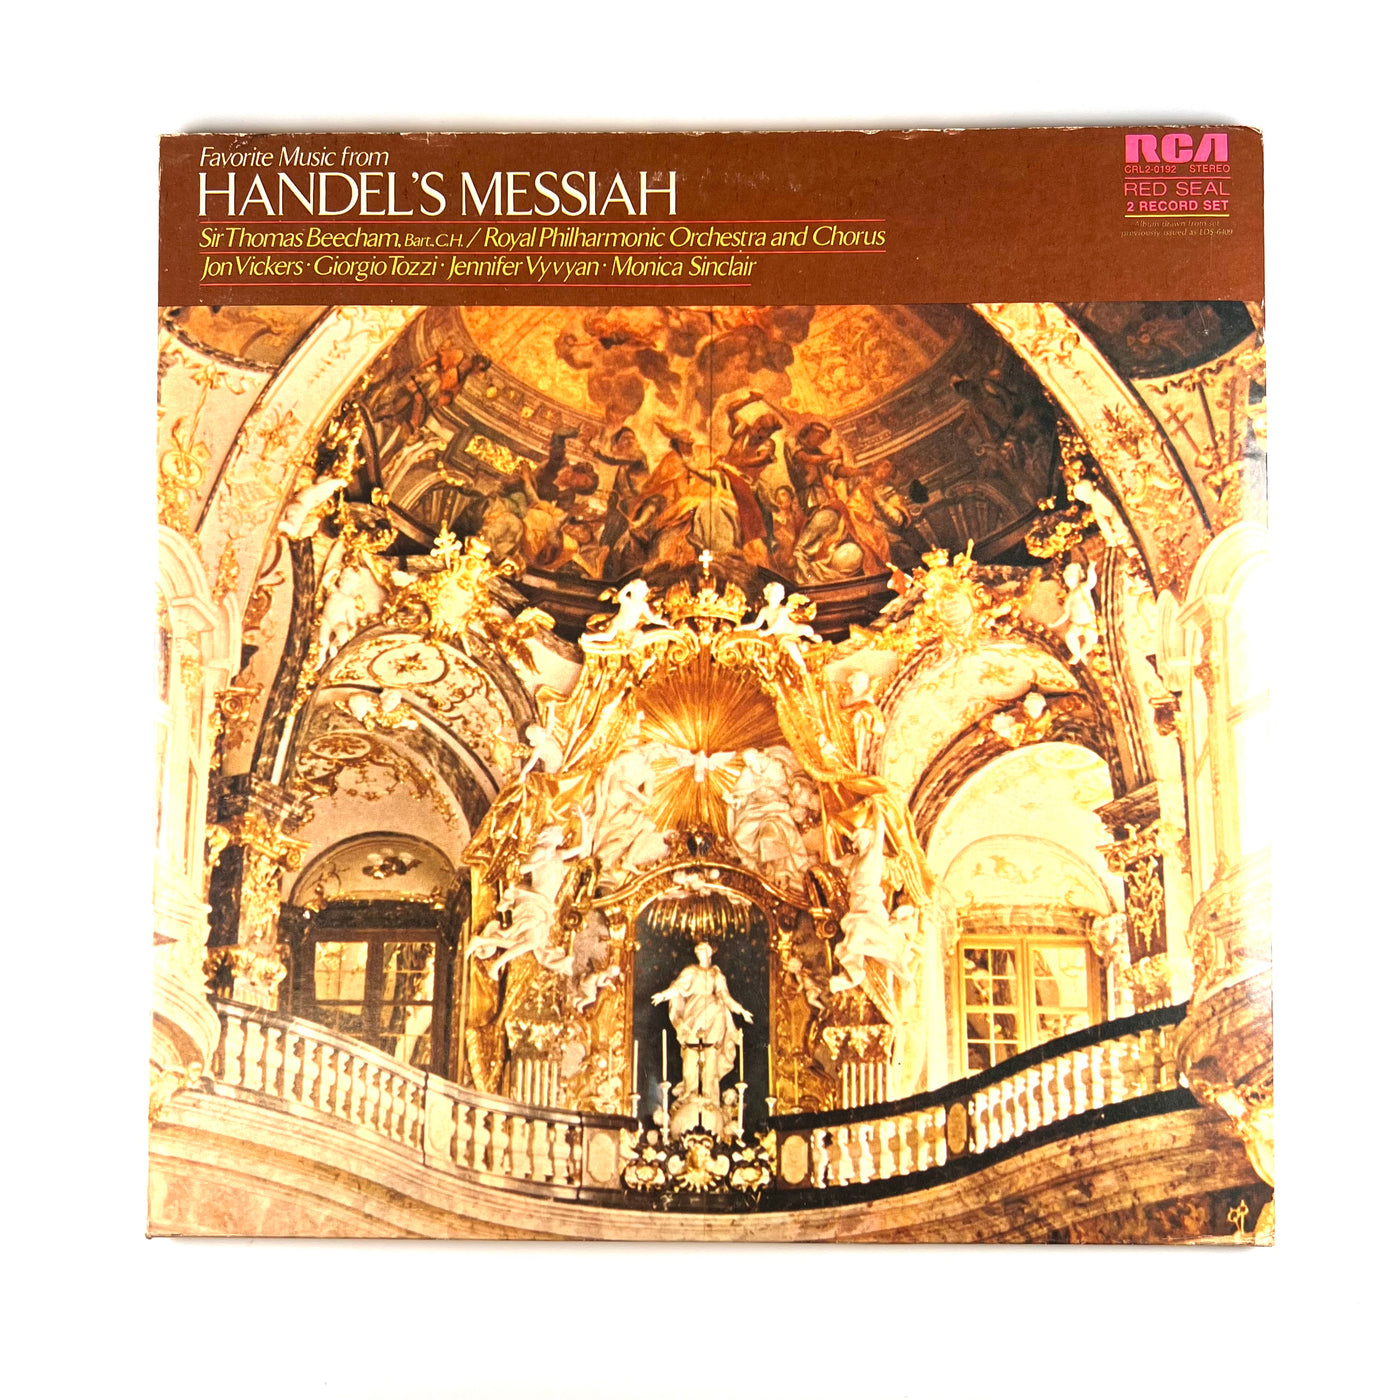 Georg Friedrich Händel ,  Sir Thomas Beecham ,  Jon Vickers ,  Giorgio Tozzi ,  Jennifer Vyvyan, Monica Sinclair - Favorite Music From Handel's "Messiah"